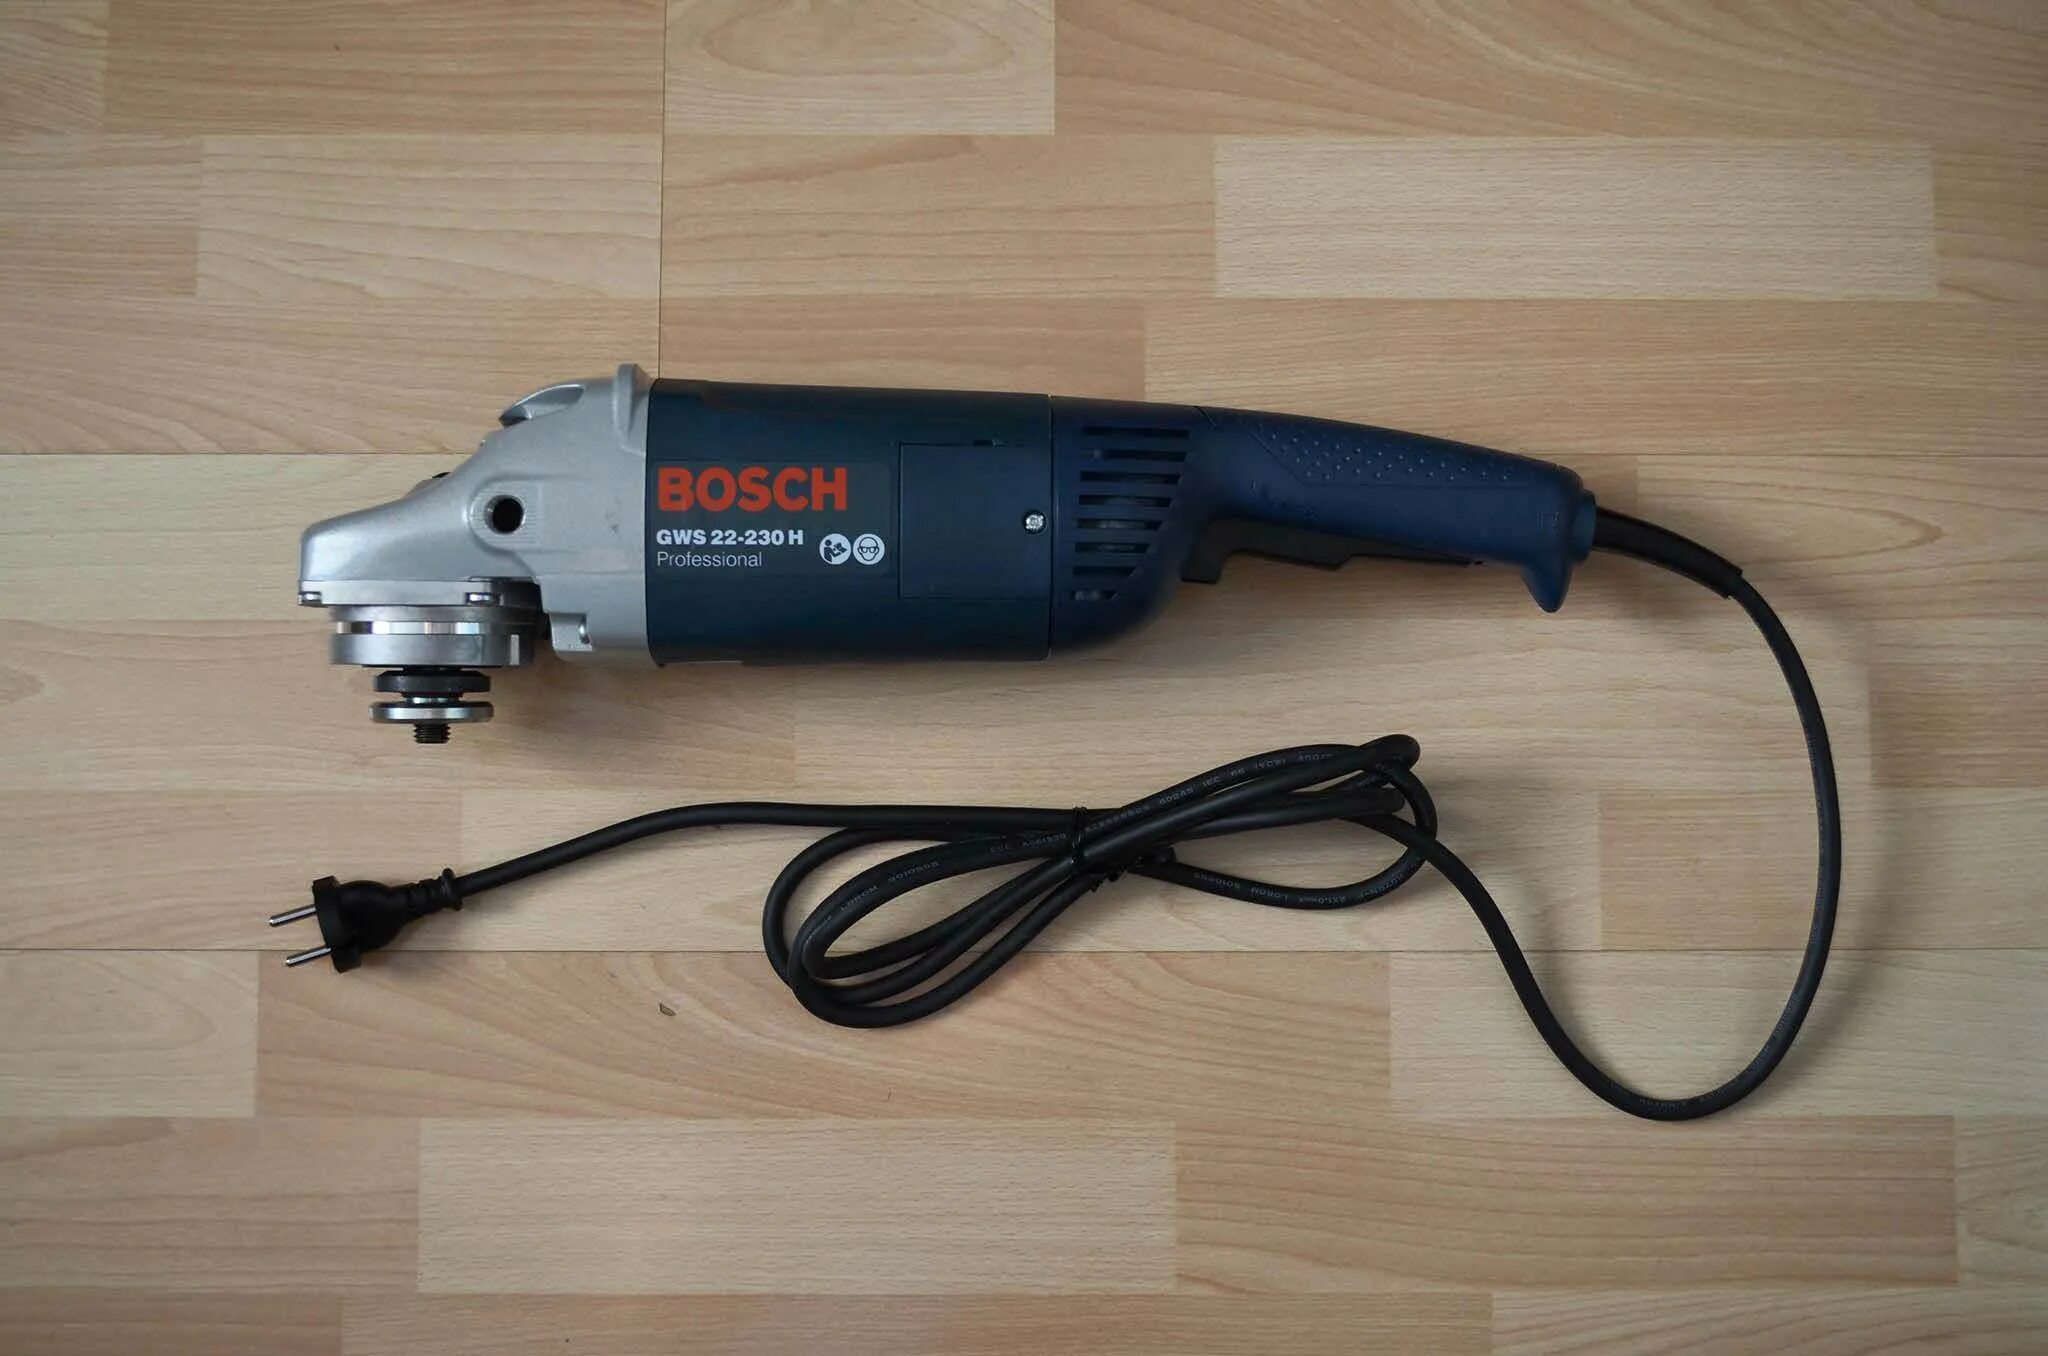 Купить bosch 230. Bosch 22-230h. GWS 22-230 H. Болгарка Bosch 22-230h. Болгарка бош 230.